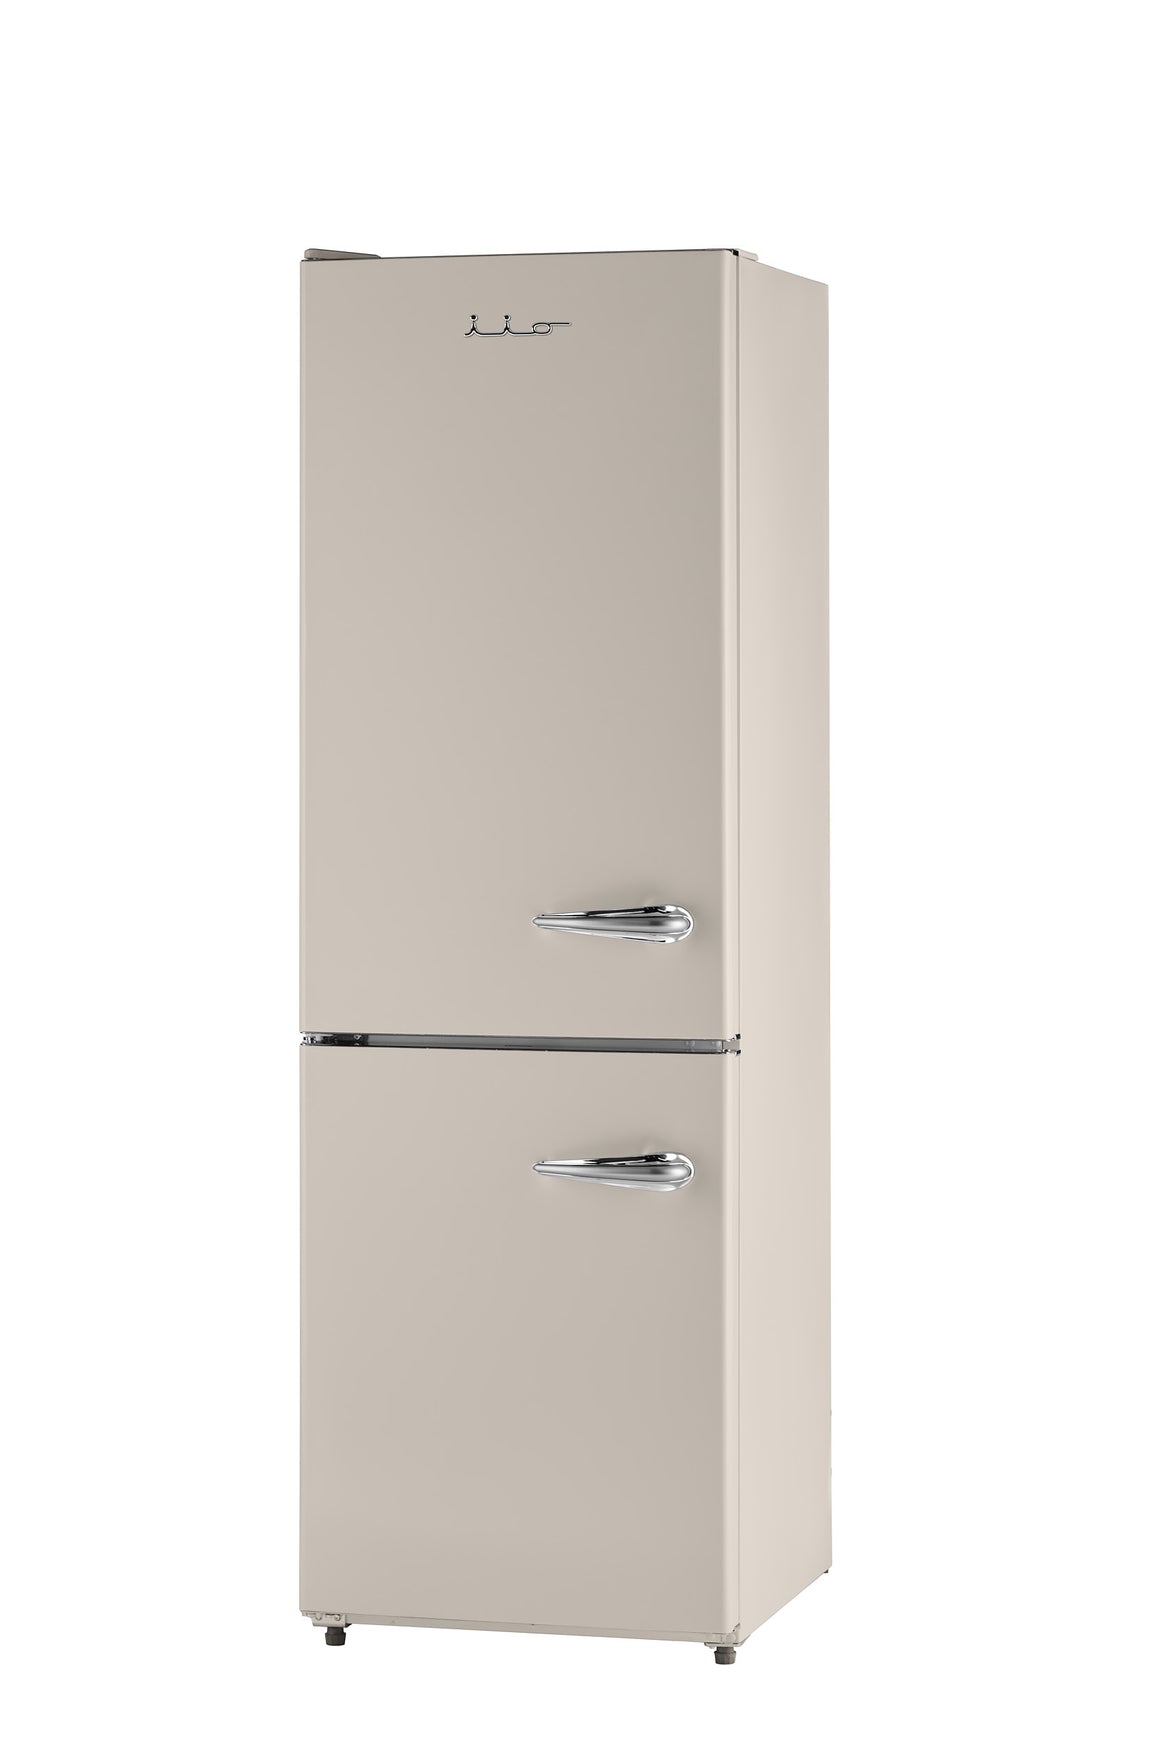 iio 11 Cu. Ft. Retro Refrigerator with Bottom Freezer in Cream (Left Hinge)